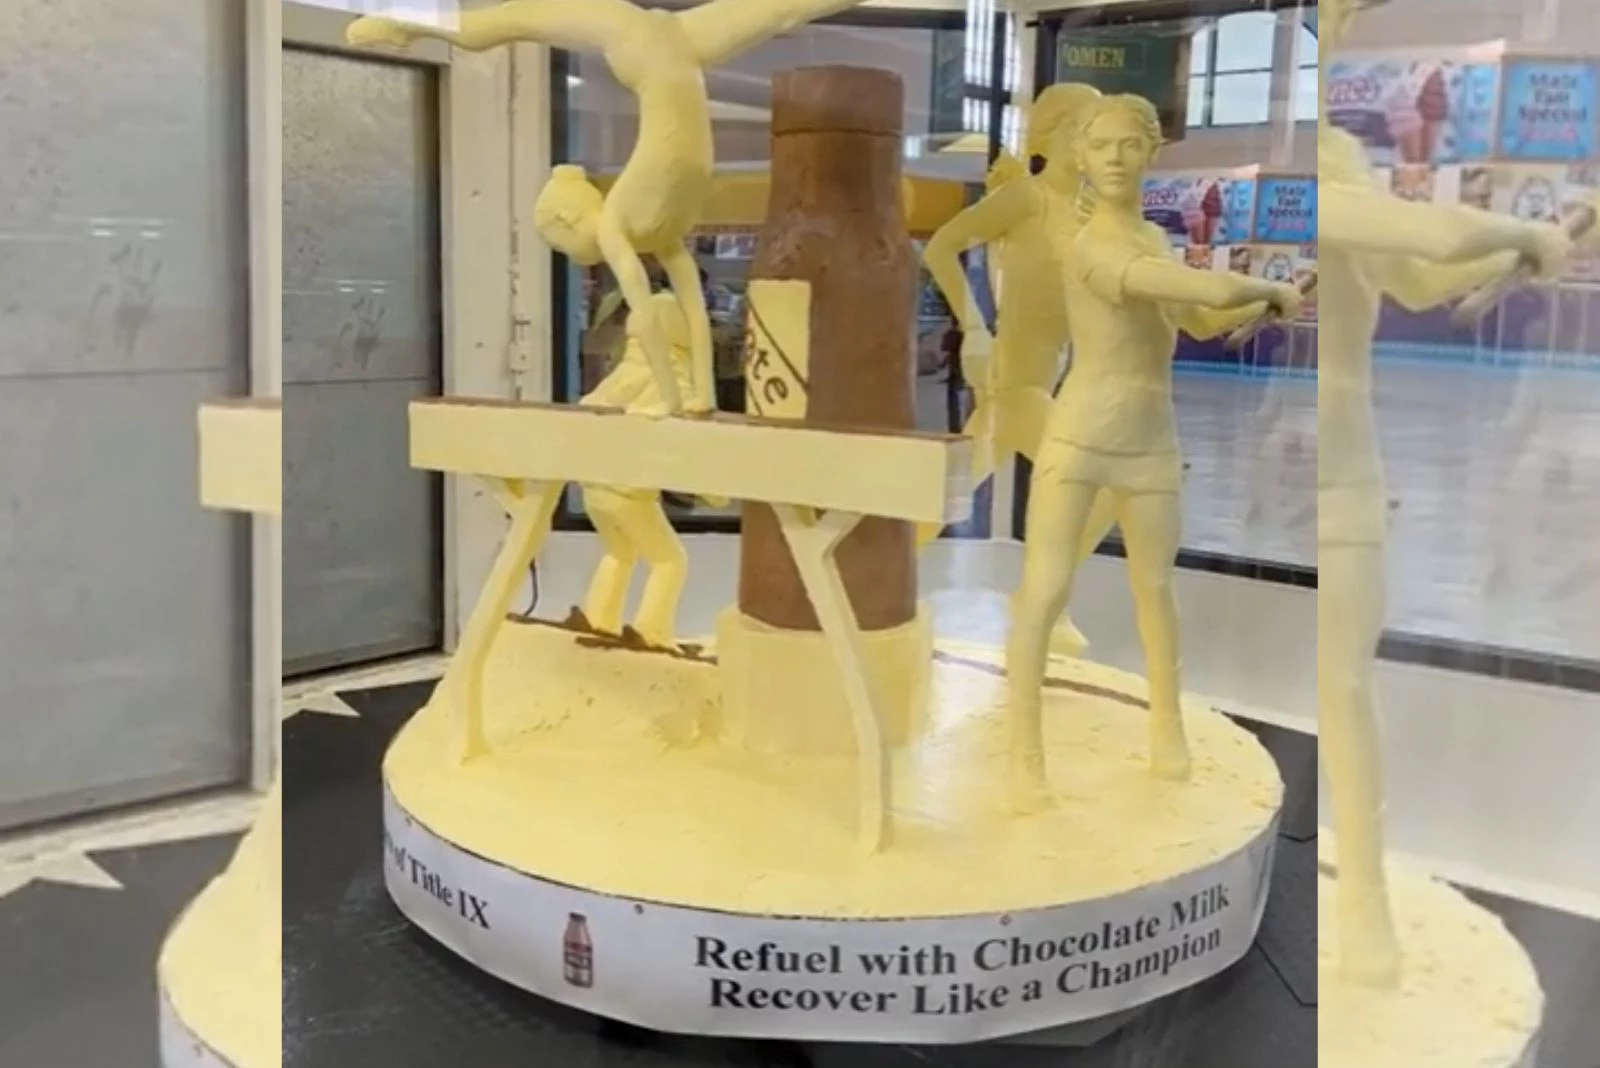 NYS Fair 2021 butter sculpture revealed (photos / video